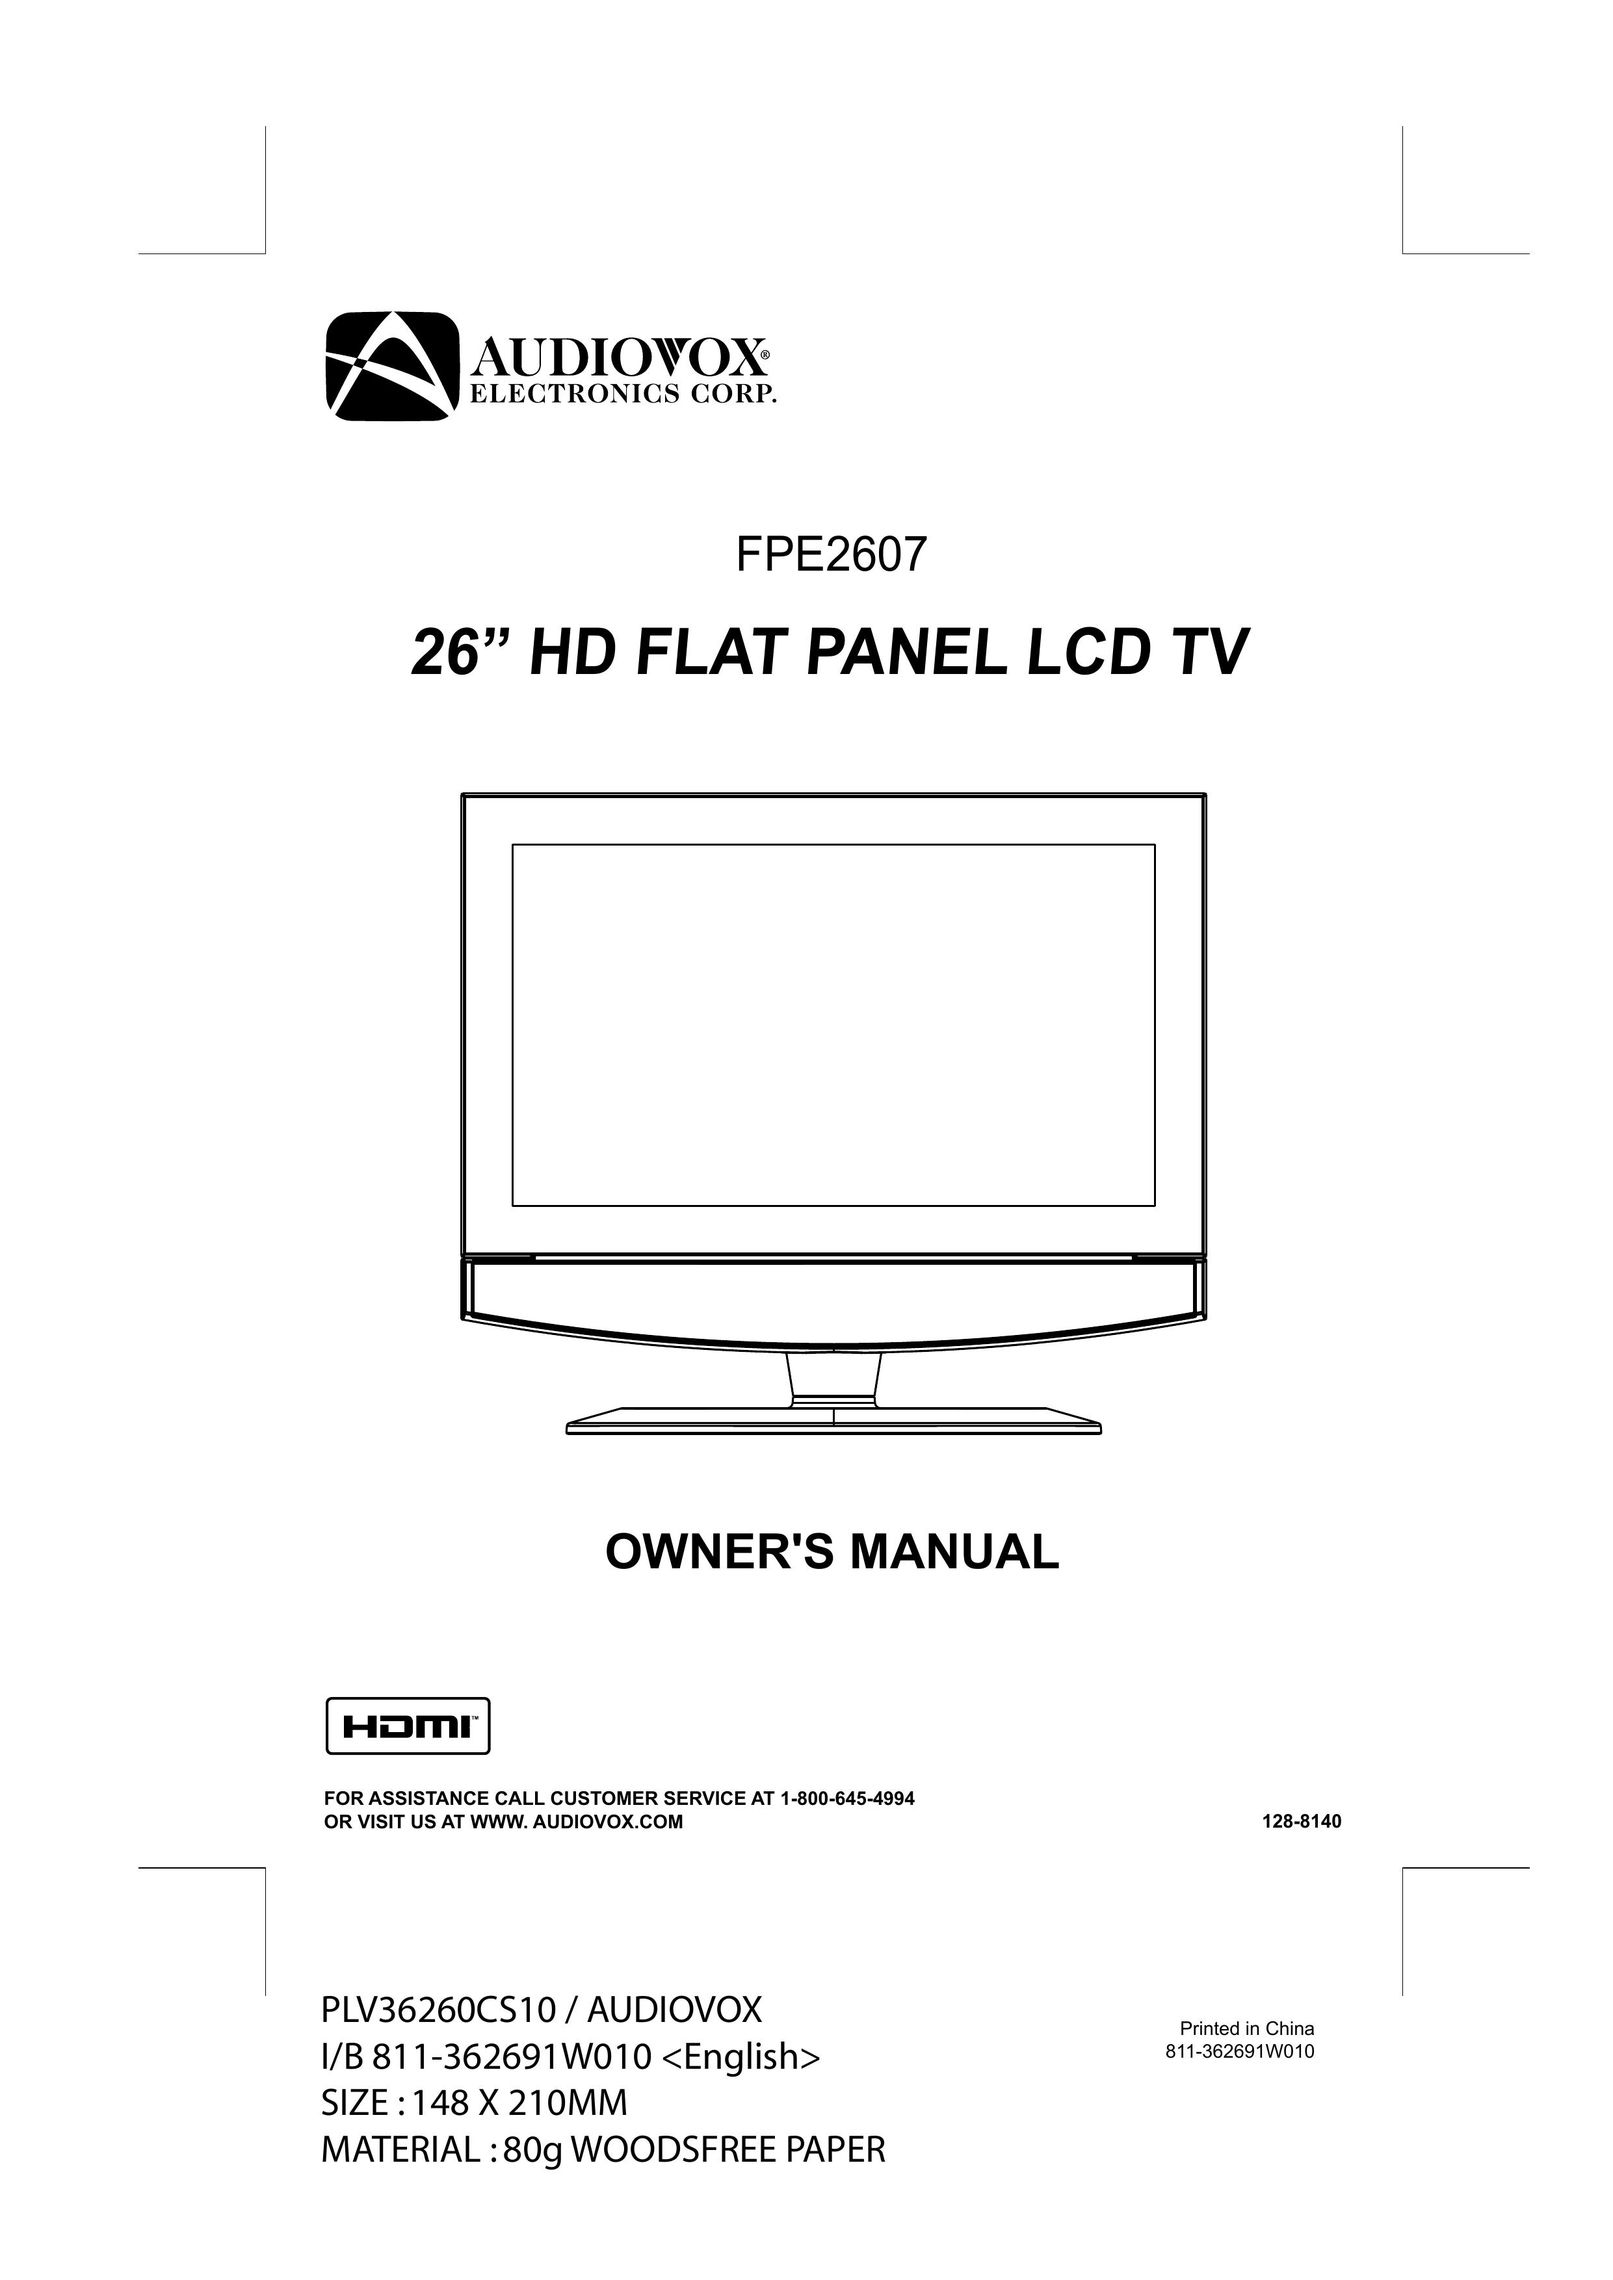 Audiovox FPE2607 Flat Panel Television User Manual